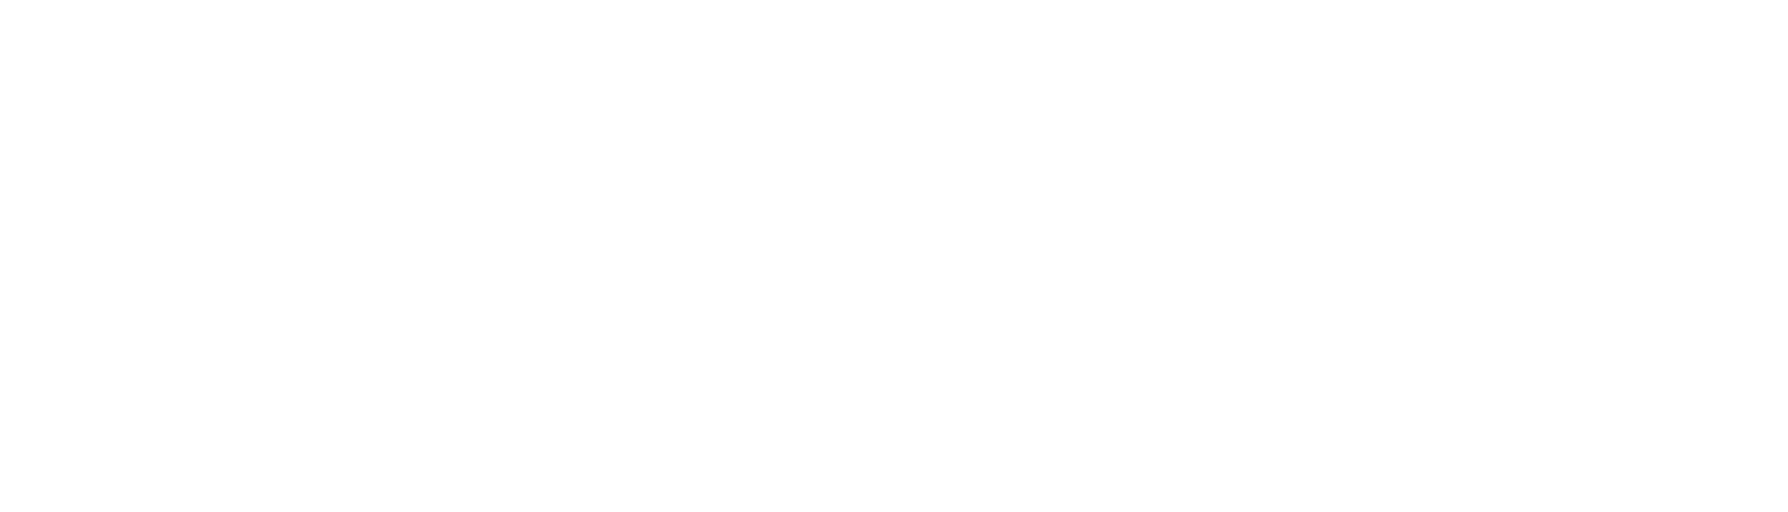 Re:signal